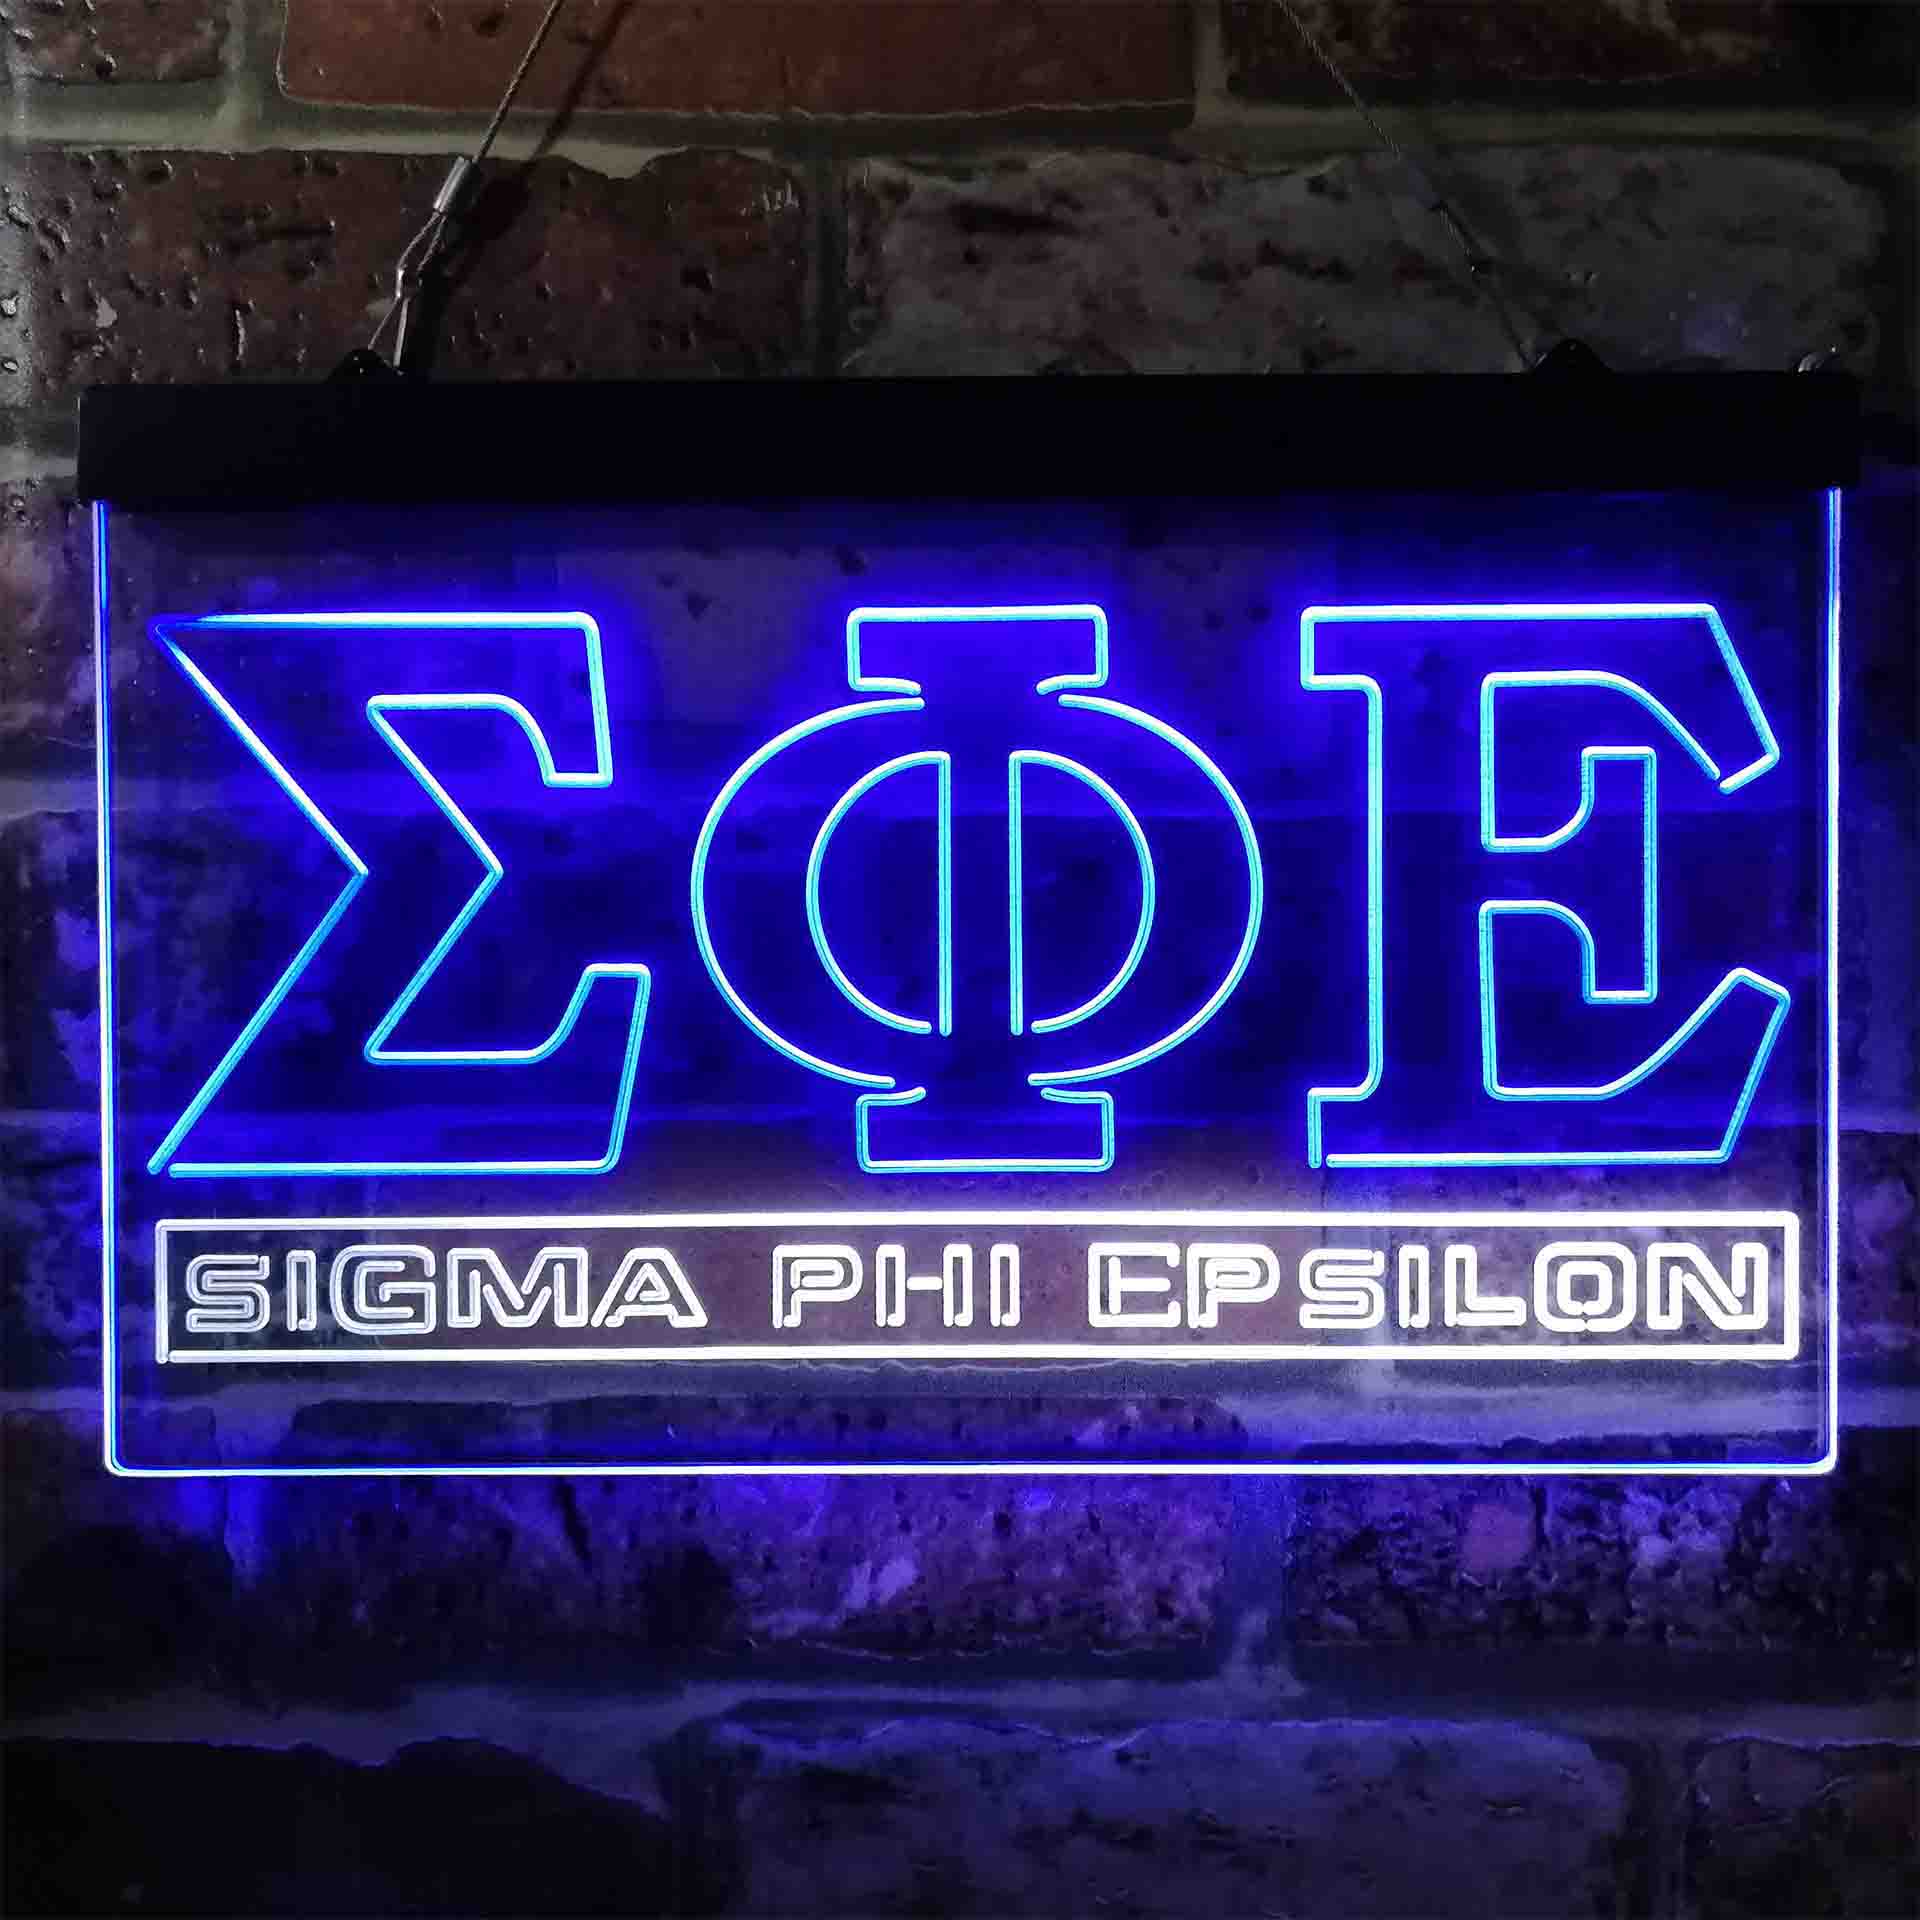 Sigma Phi Epsilon Fraternity Greek Letter Organization Neon-Like LED Sign